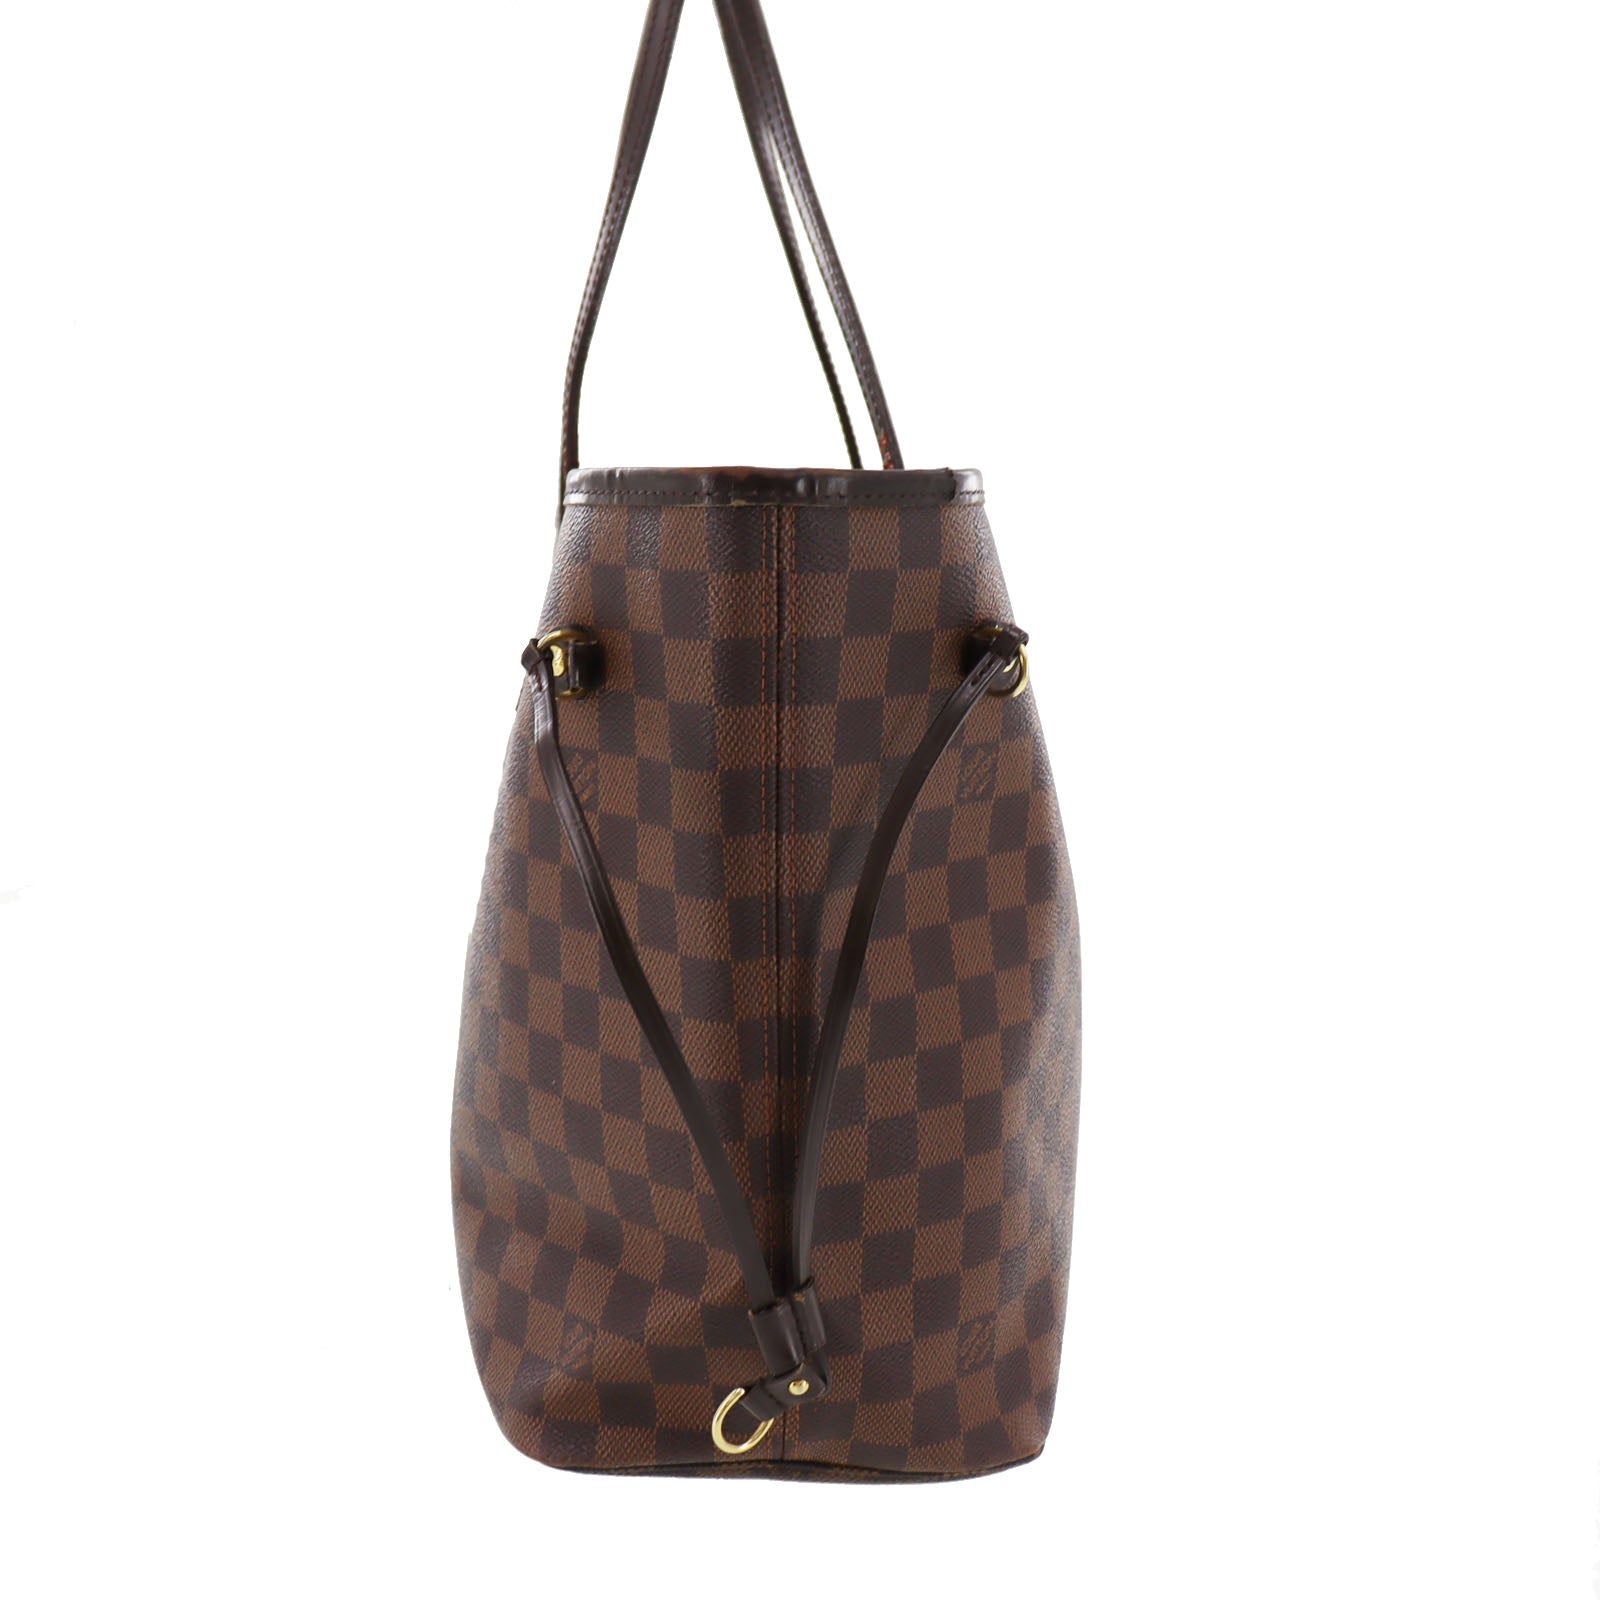 Louis Vuitton Damier New Neverfull MM N41358 Tote Bag Shoulder Bag